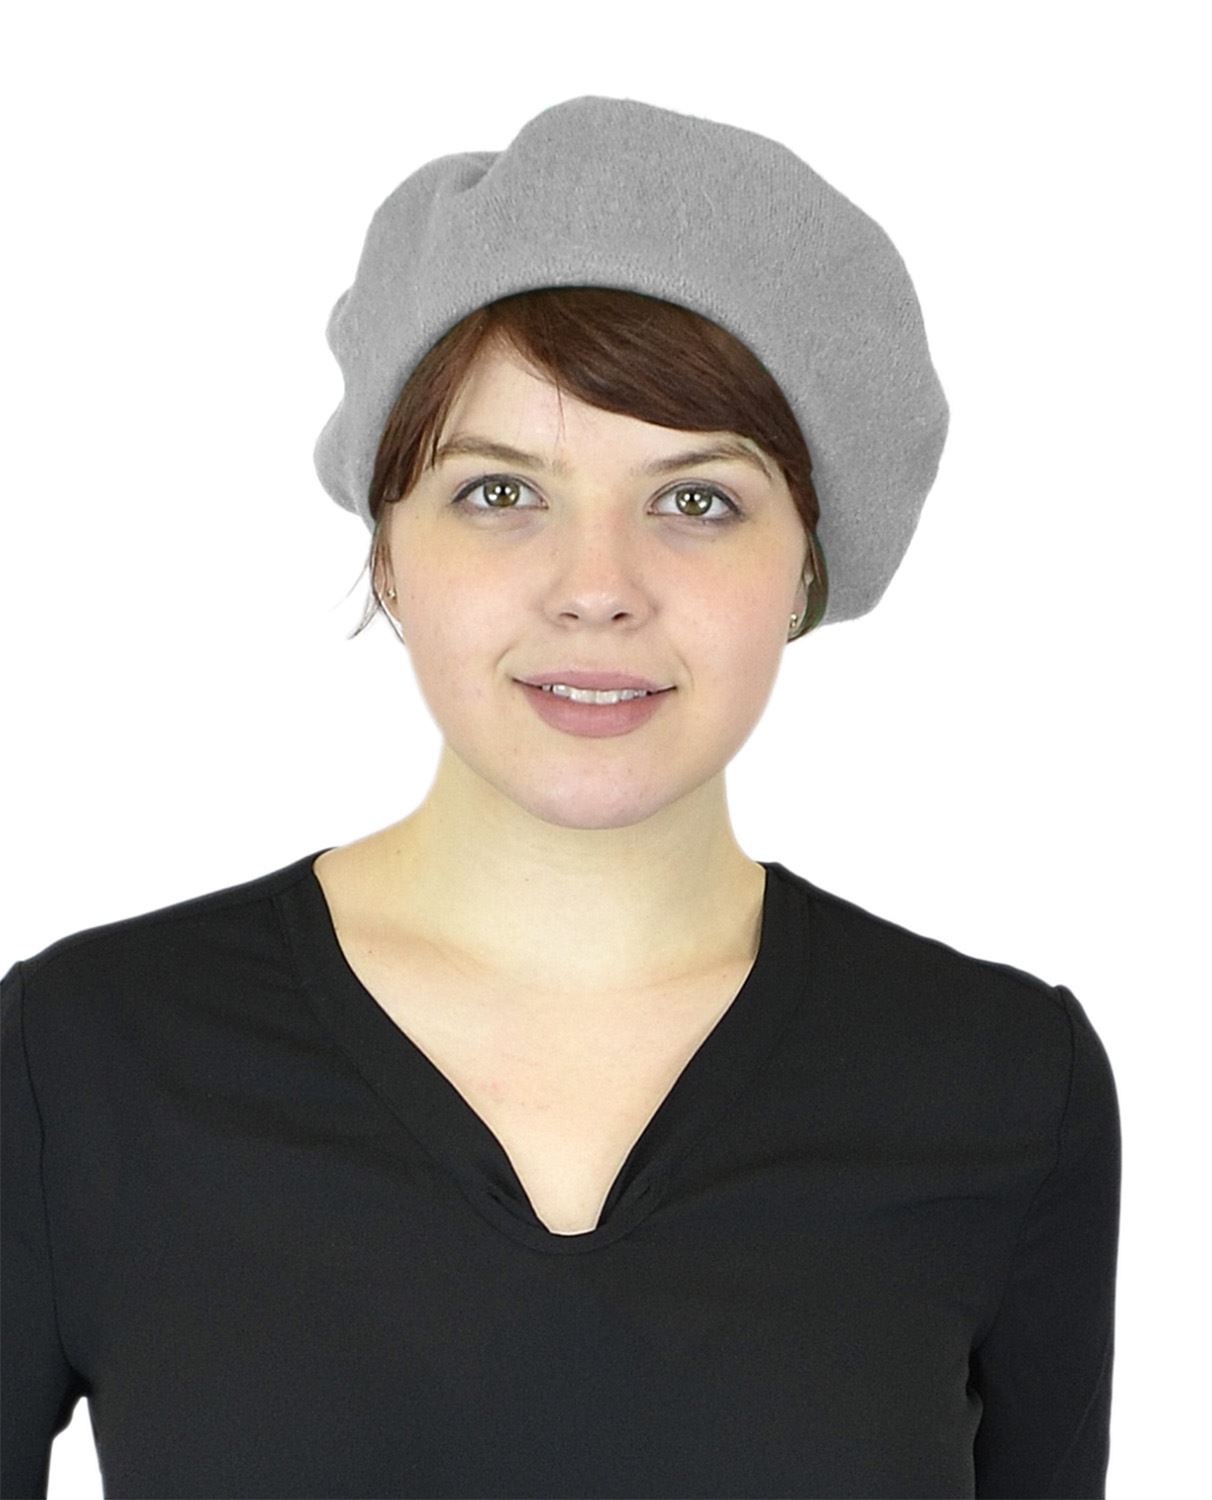 Belle Donne - Women's Soft Wool Classic Style Beanie Hat Cap - Light Grey